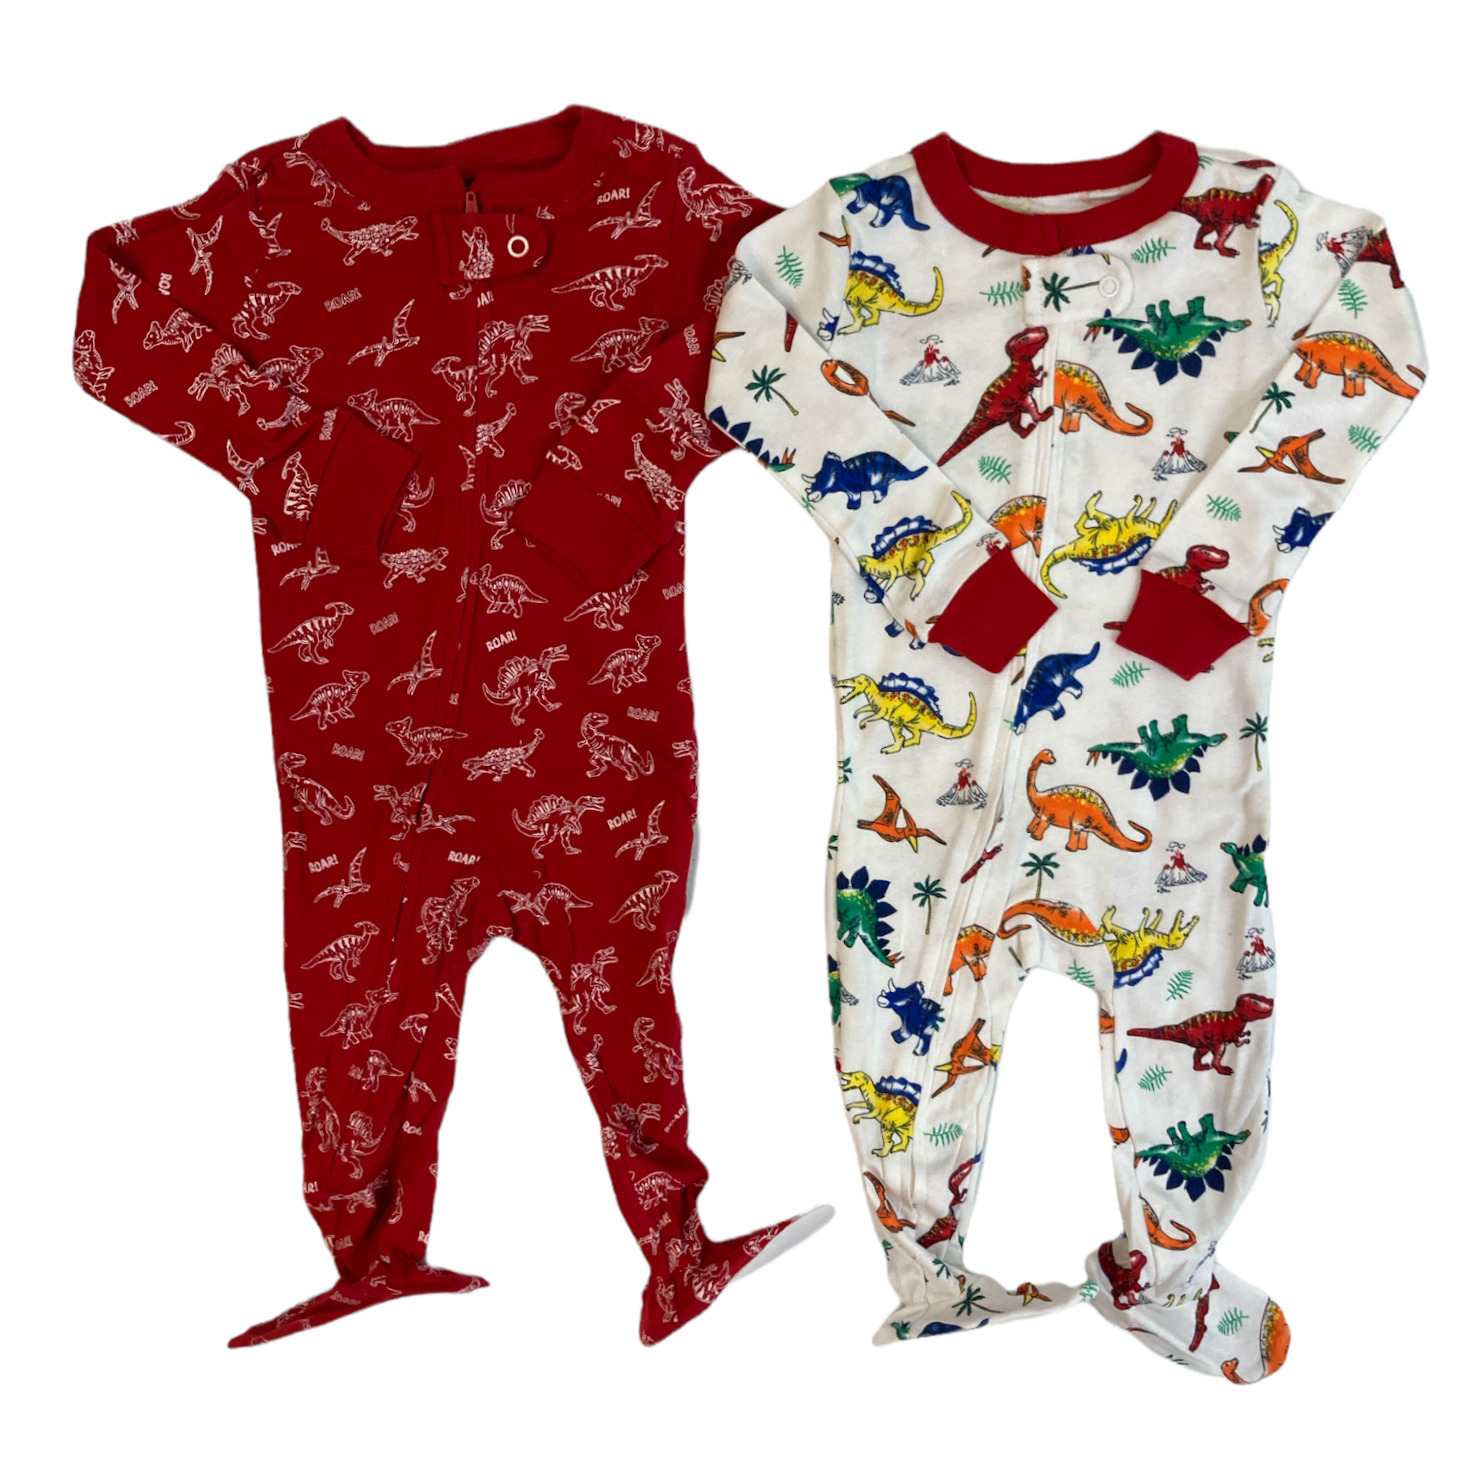 Member's Mark Baby Boy's 2-Pack Snug Fit Favorite Pajamas